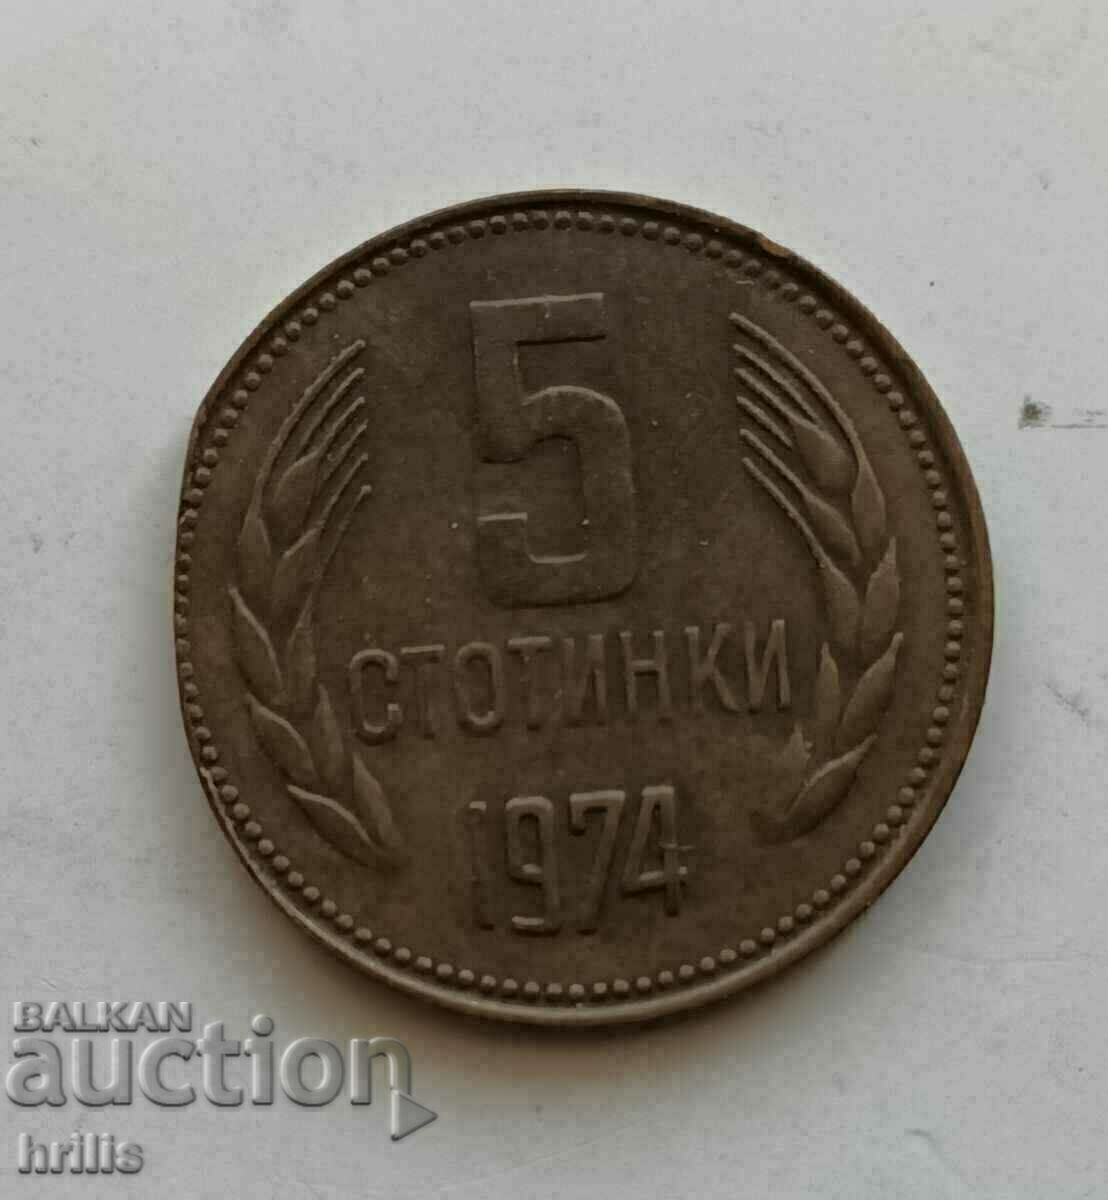 5 CENTS 1974 - ΠΕΡΙΕΡΓΟΣ